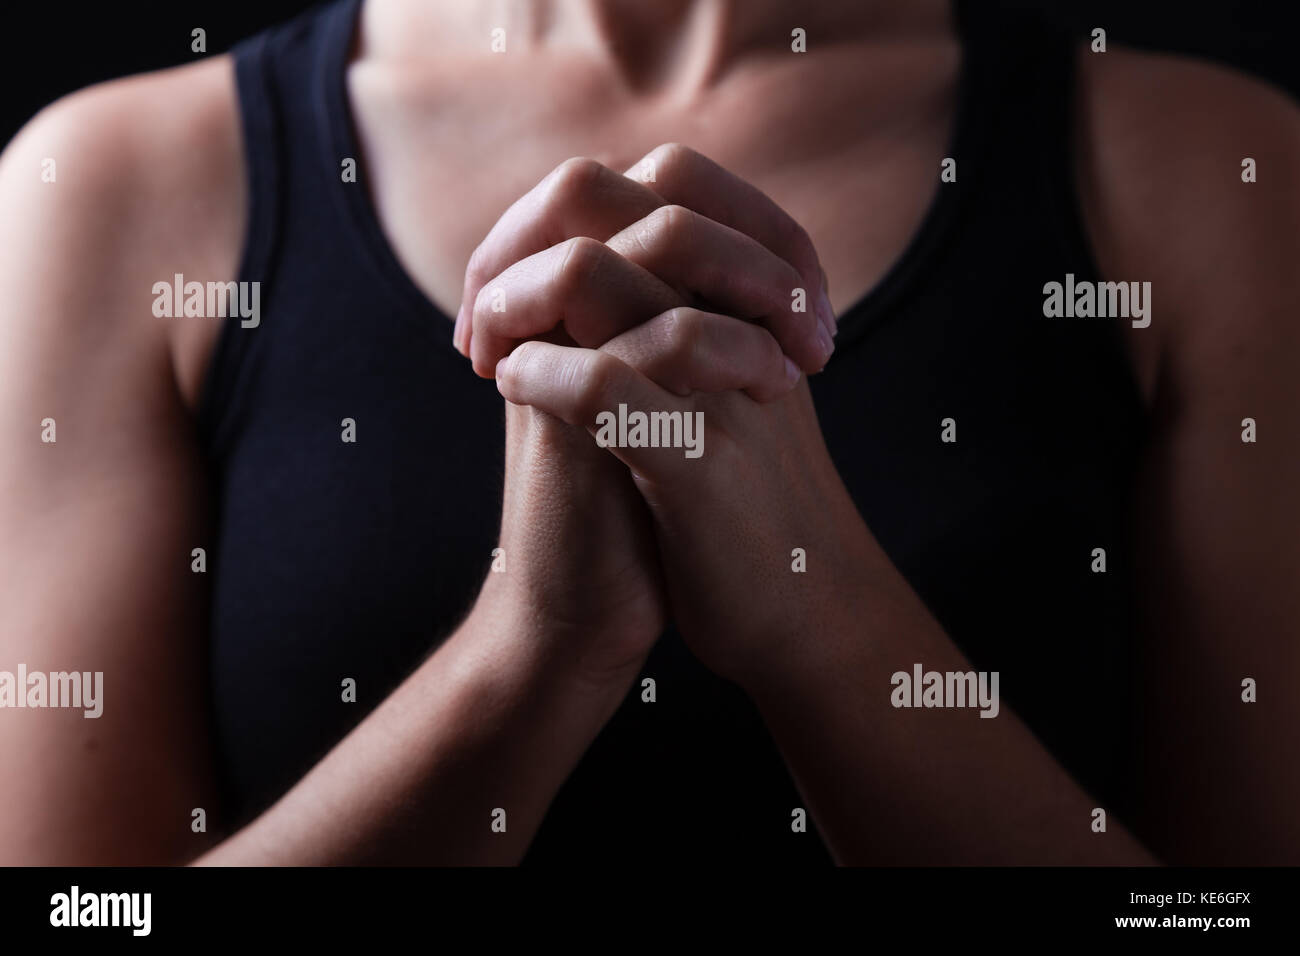 Hands of faithful woman praying, hands folded, interlaced fingers in worship to god / pray prayer folded christian catholic worshiper worshiping Stock Photo